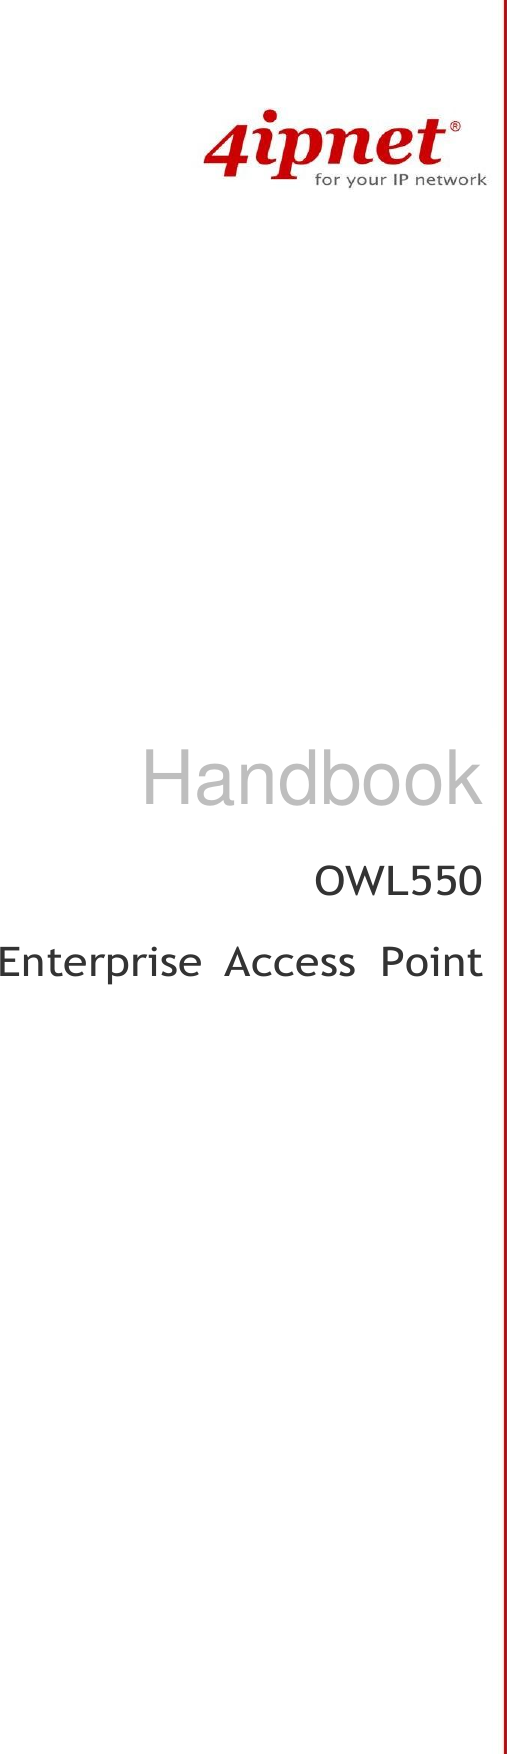                        Handbook OWL550 Enterprise  Access  Point 